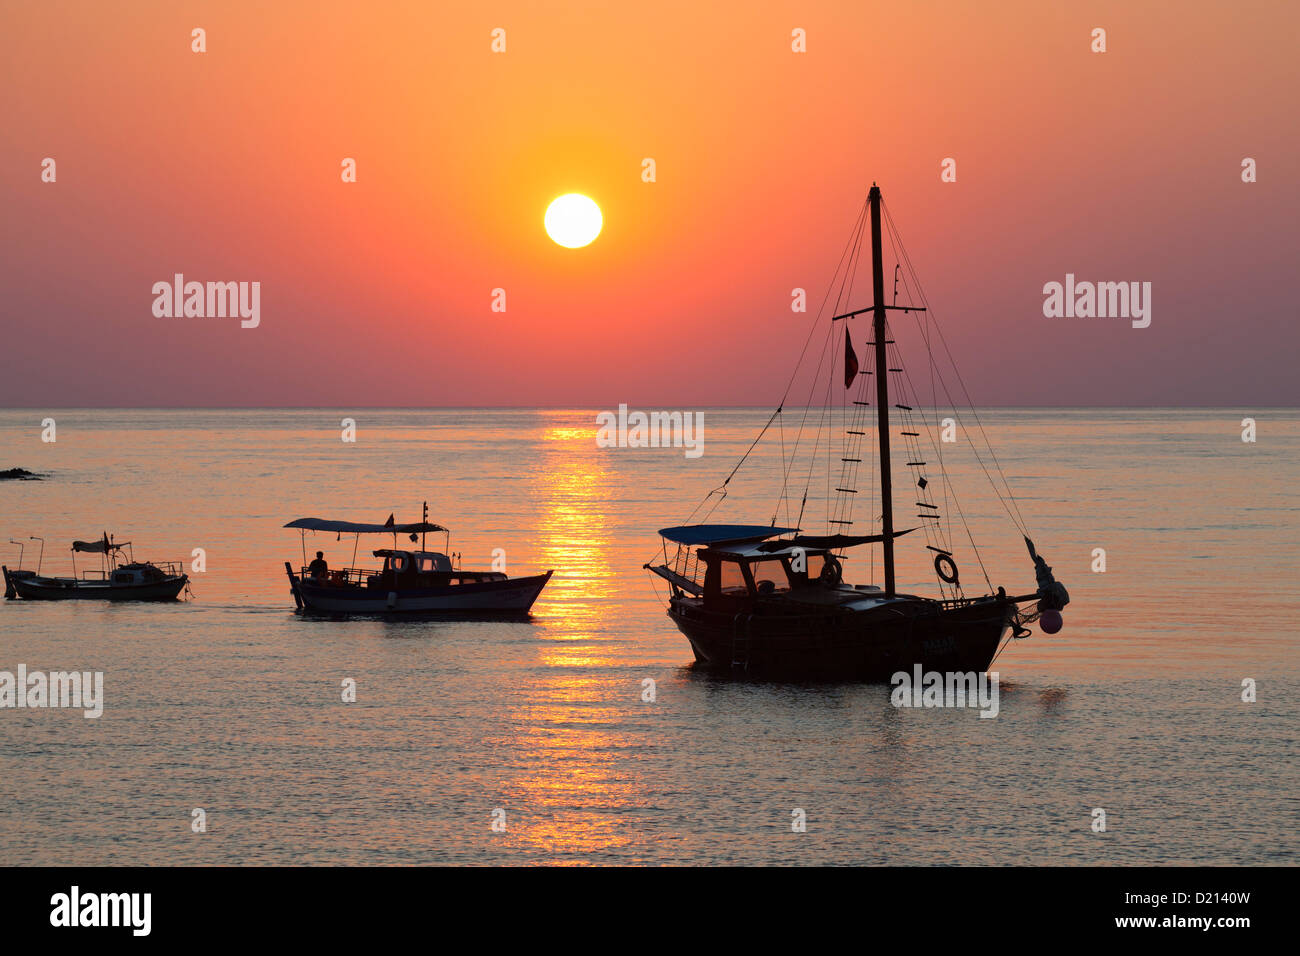 Sailing boats at sunrise on the sea, Cirali, Mediterranean Sea, Lycia, Turkey Stock Photo